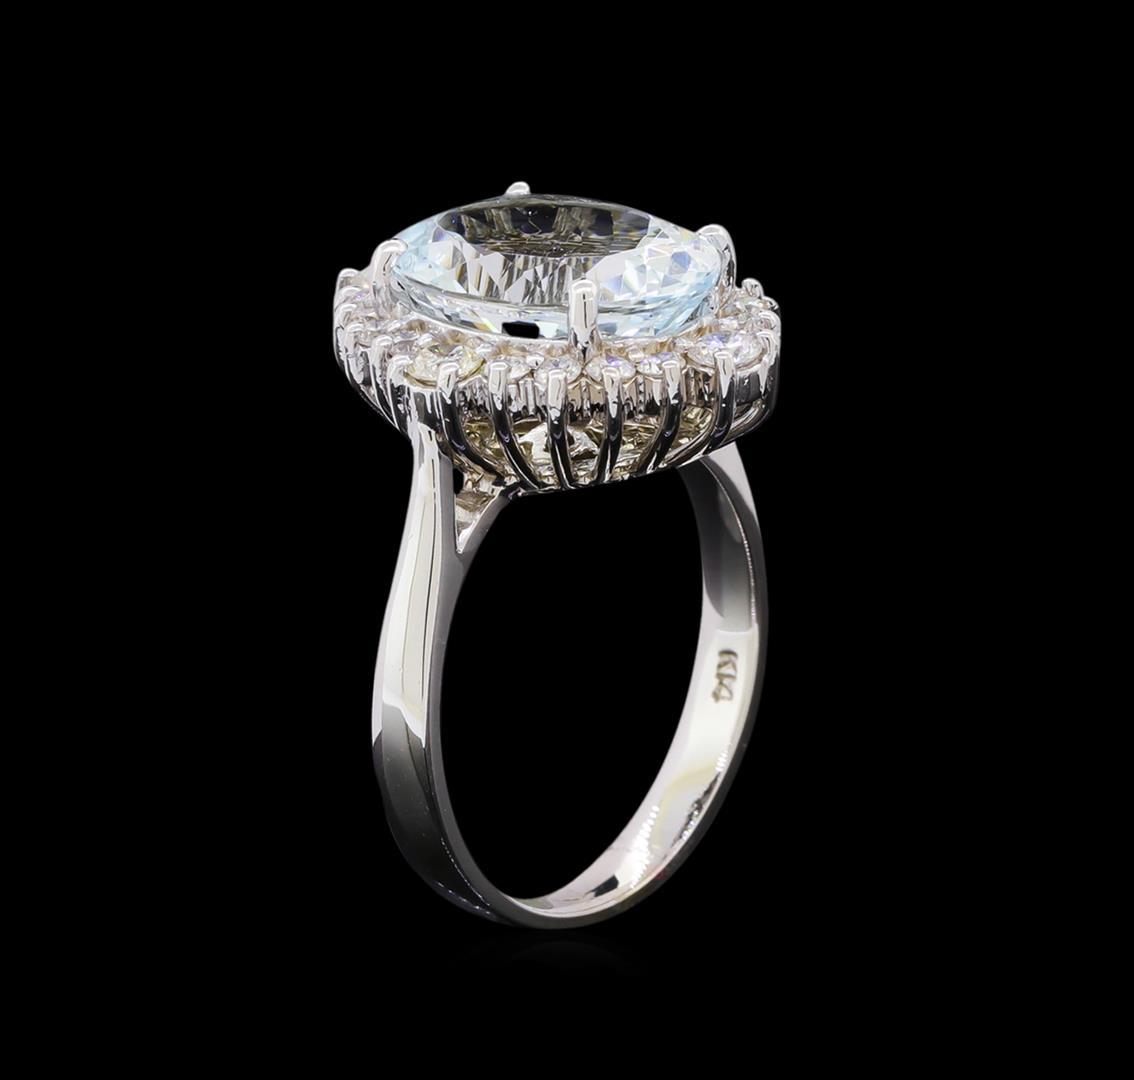 4.68 ctw Aquamarine and Diamond Ring - 14KT White Gold